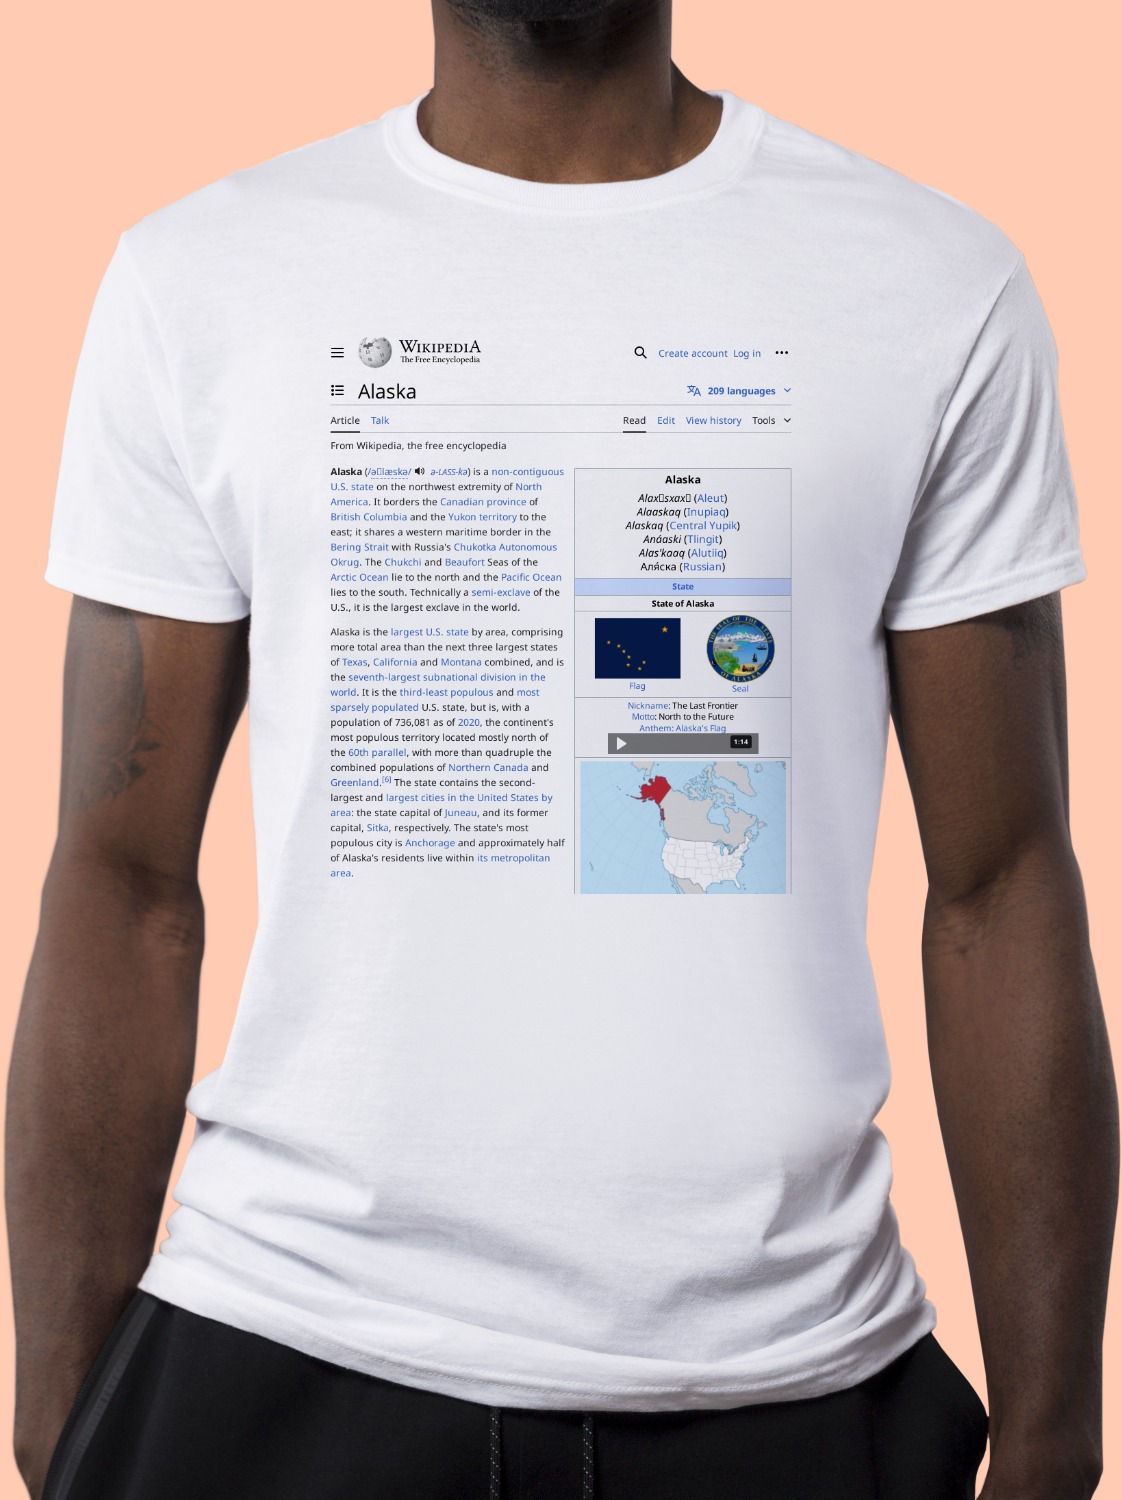 Alaska Wikipedia Shirt